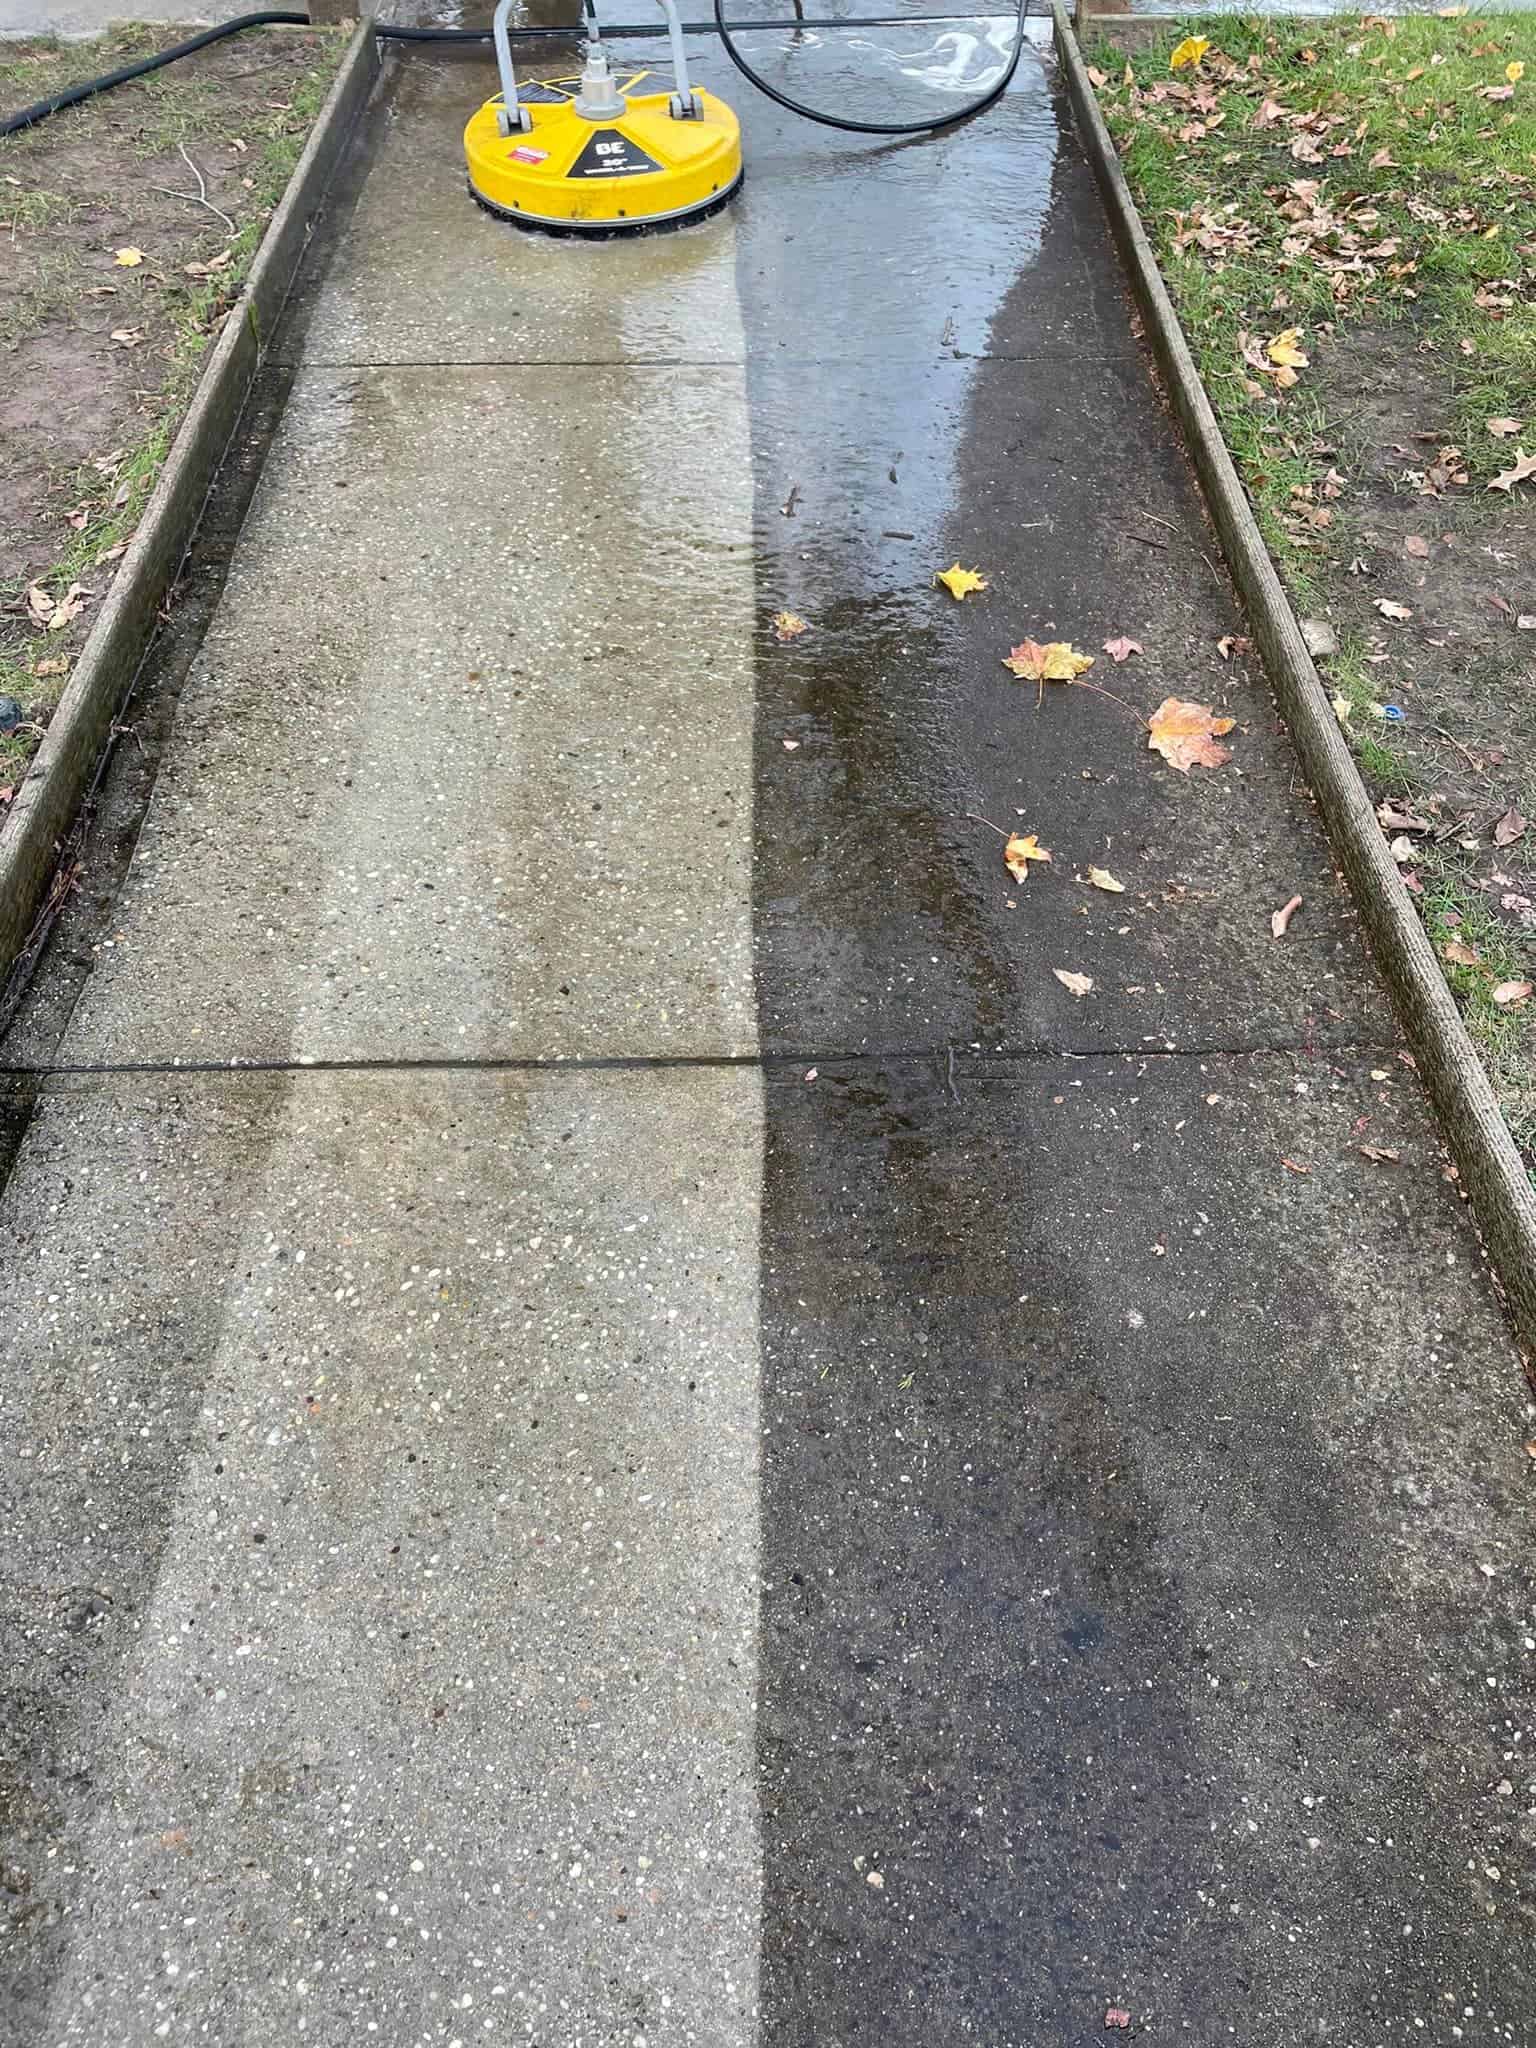 sidewalk being soft washed.